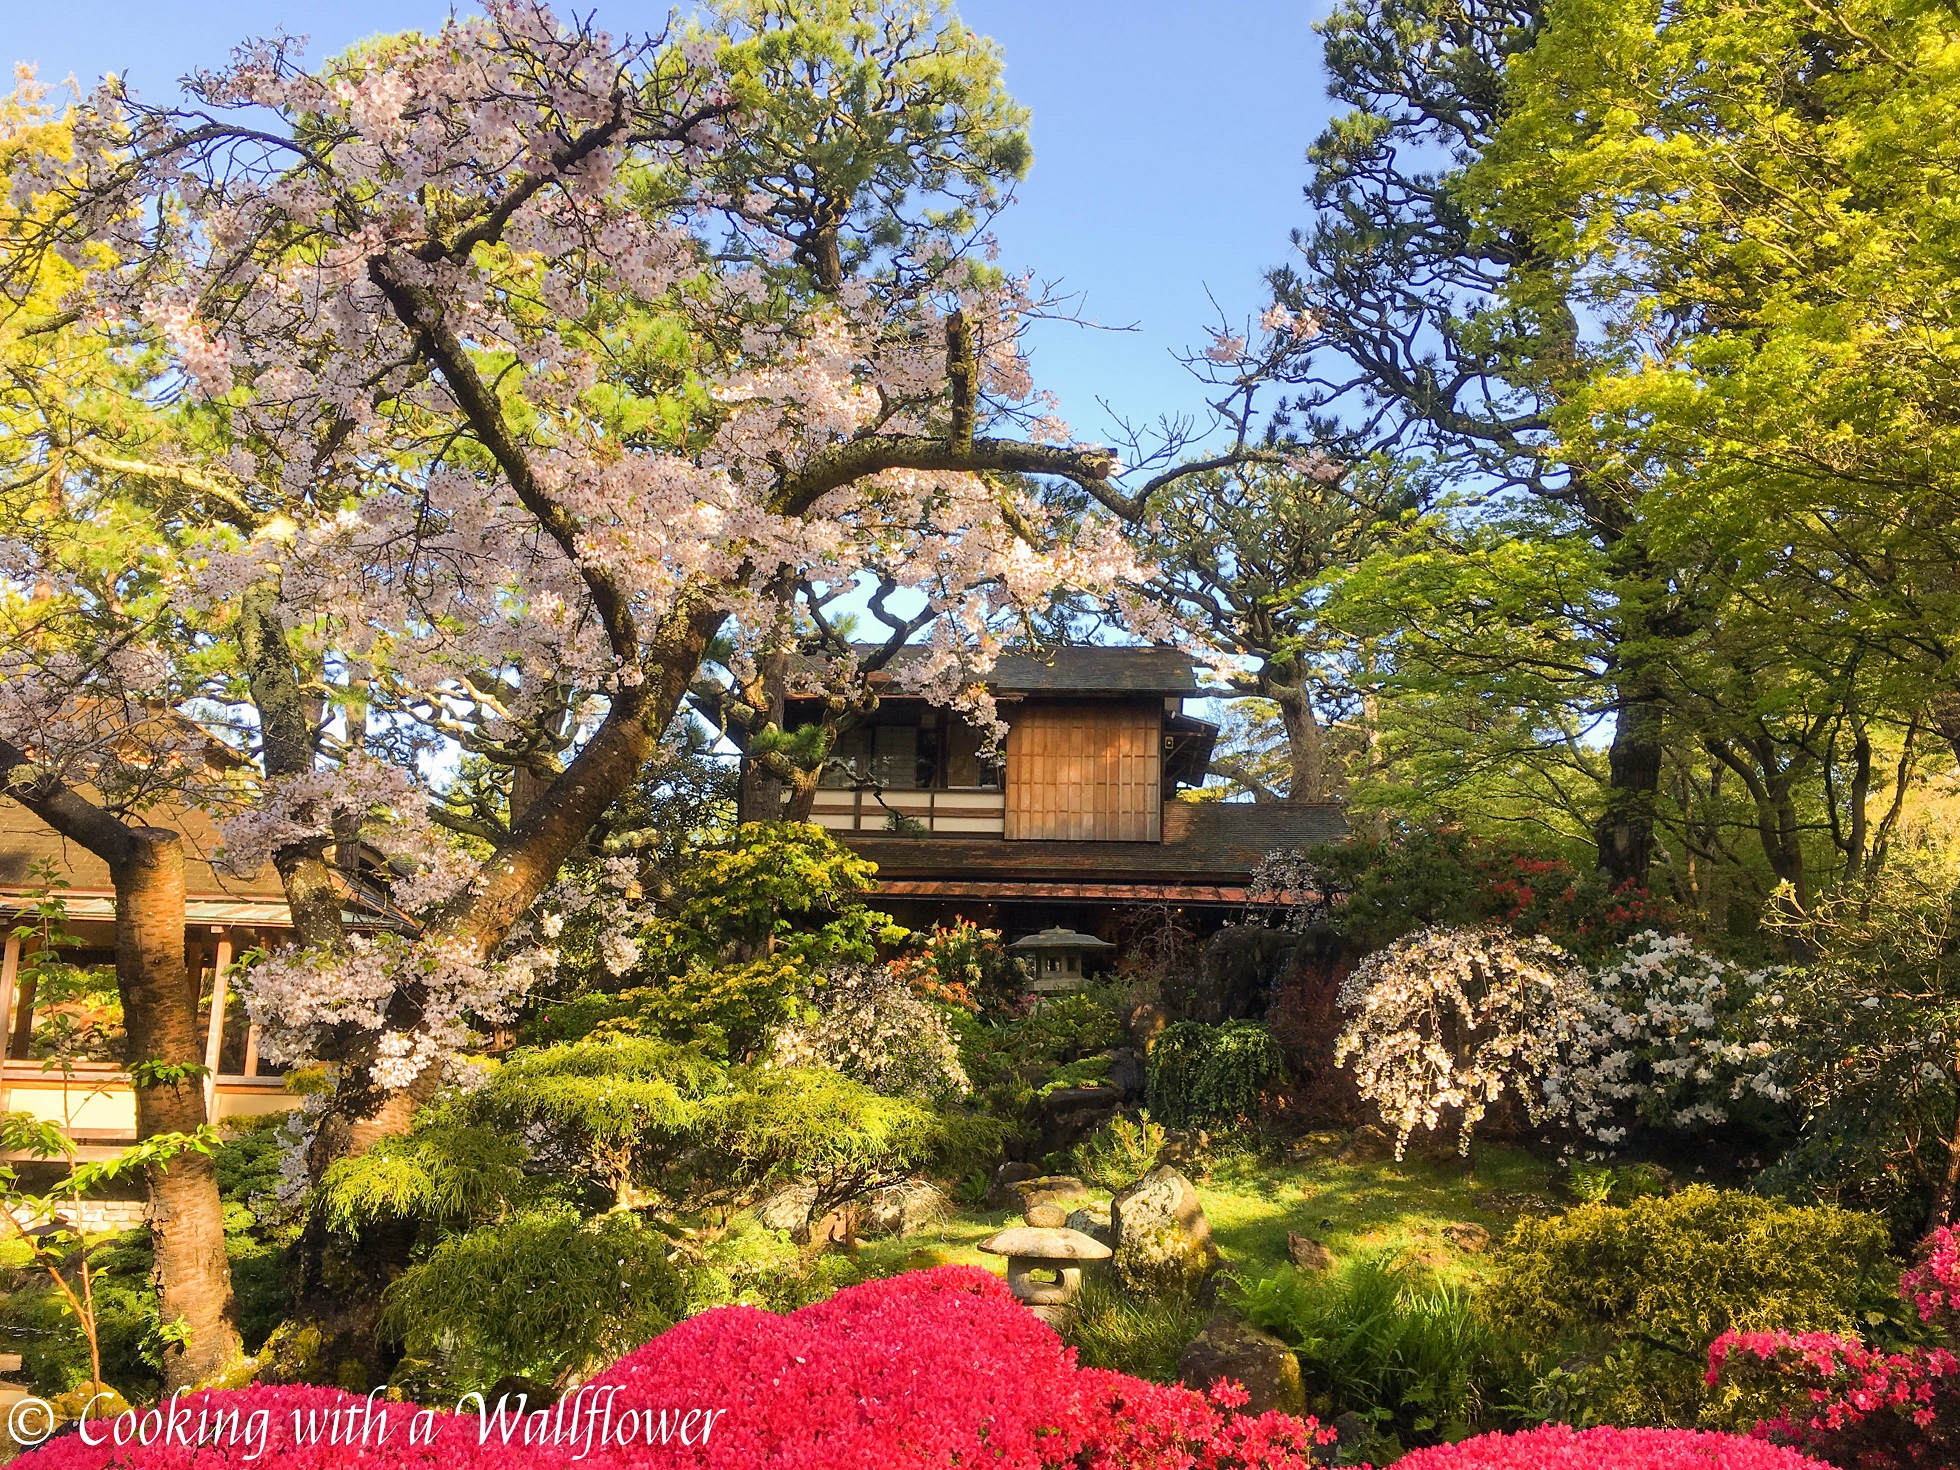 Destination: Japanese Tea Garden